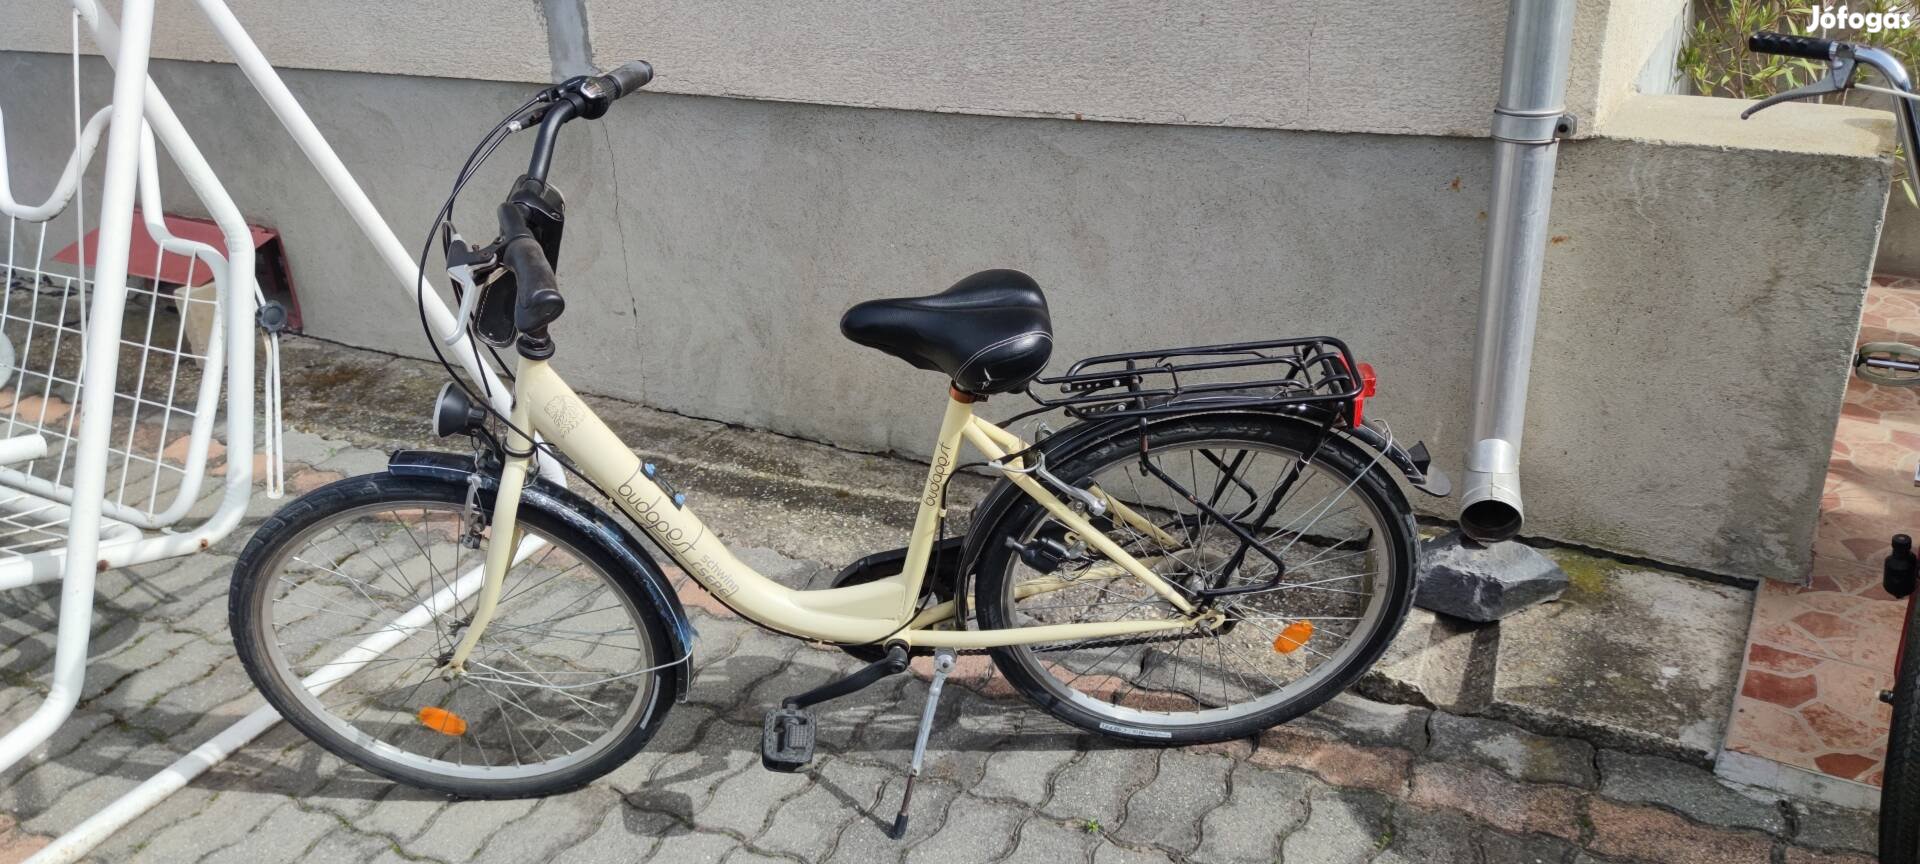 Eladó Csepel Budapest bicikli 